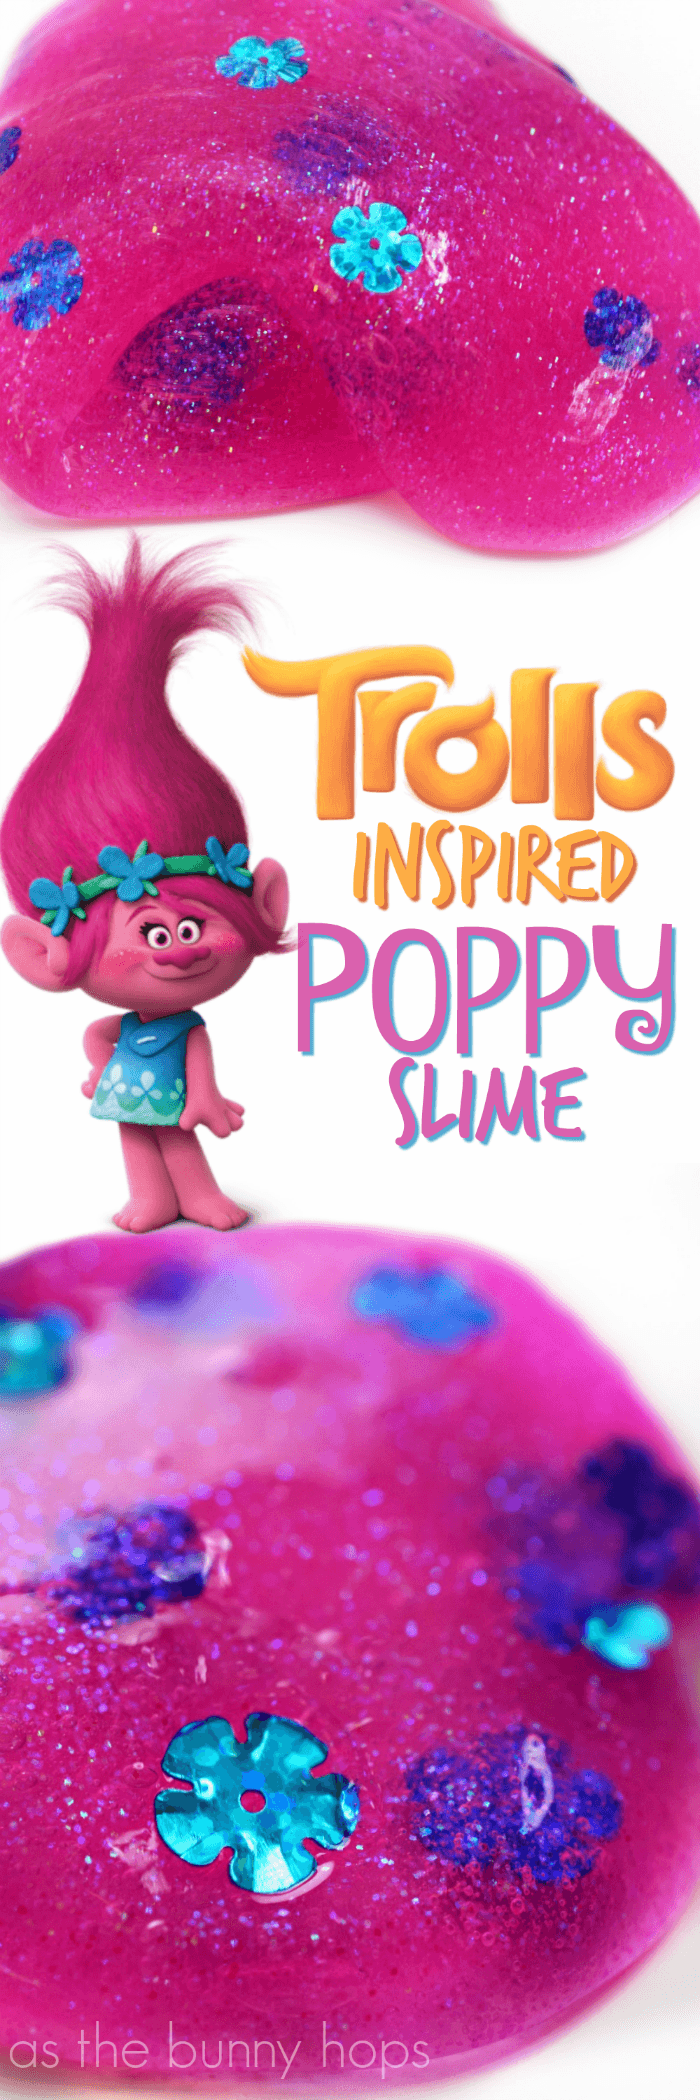 Poppy Slime Logo - Make Yourself A Batch Of Hot Pink, Glittery, Trolls Inspired Poppy